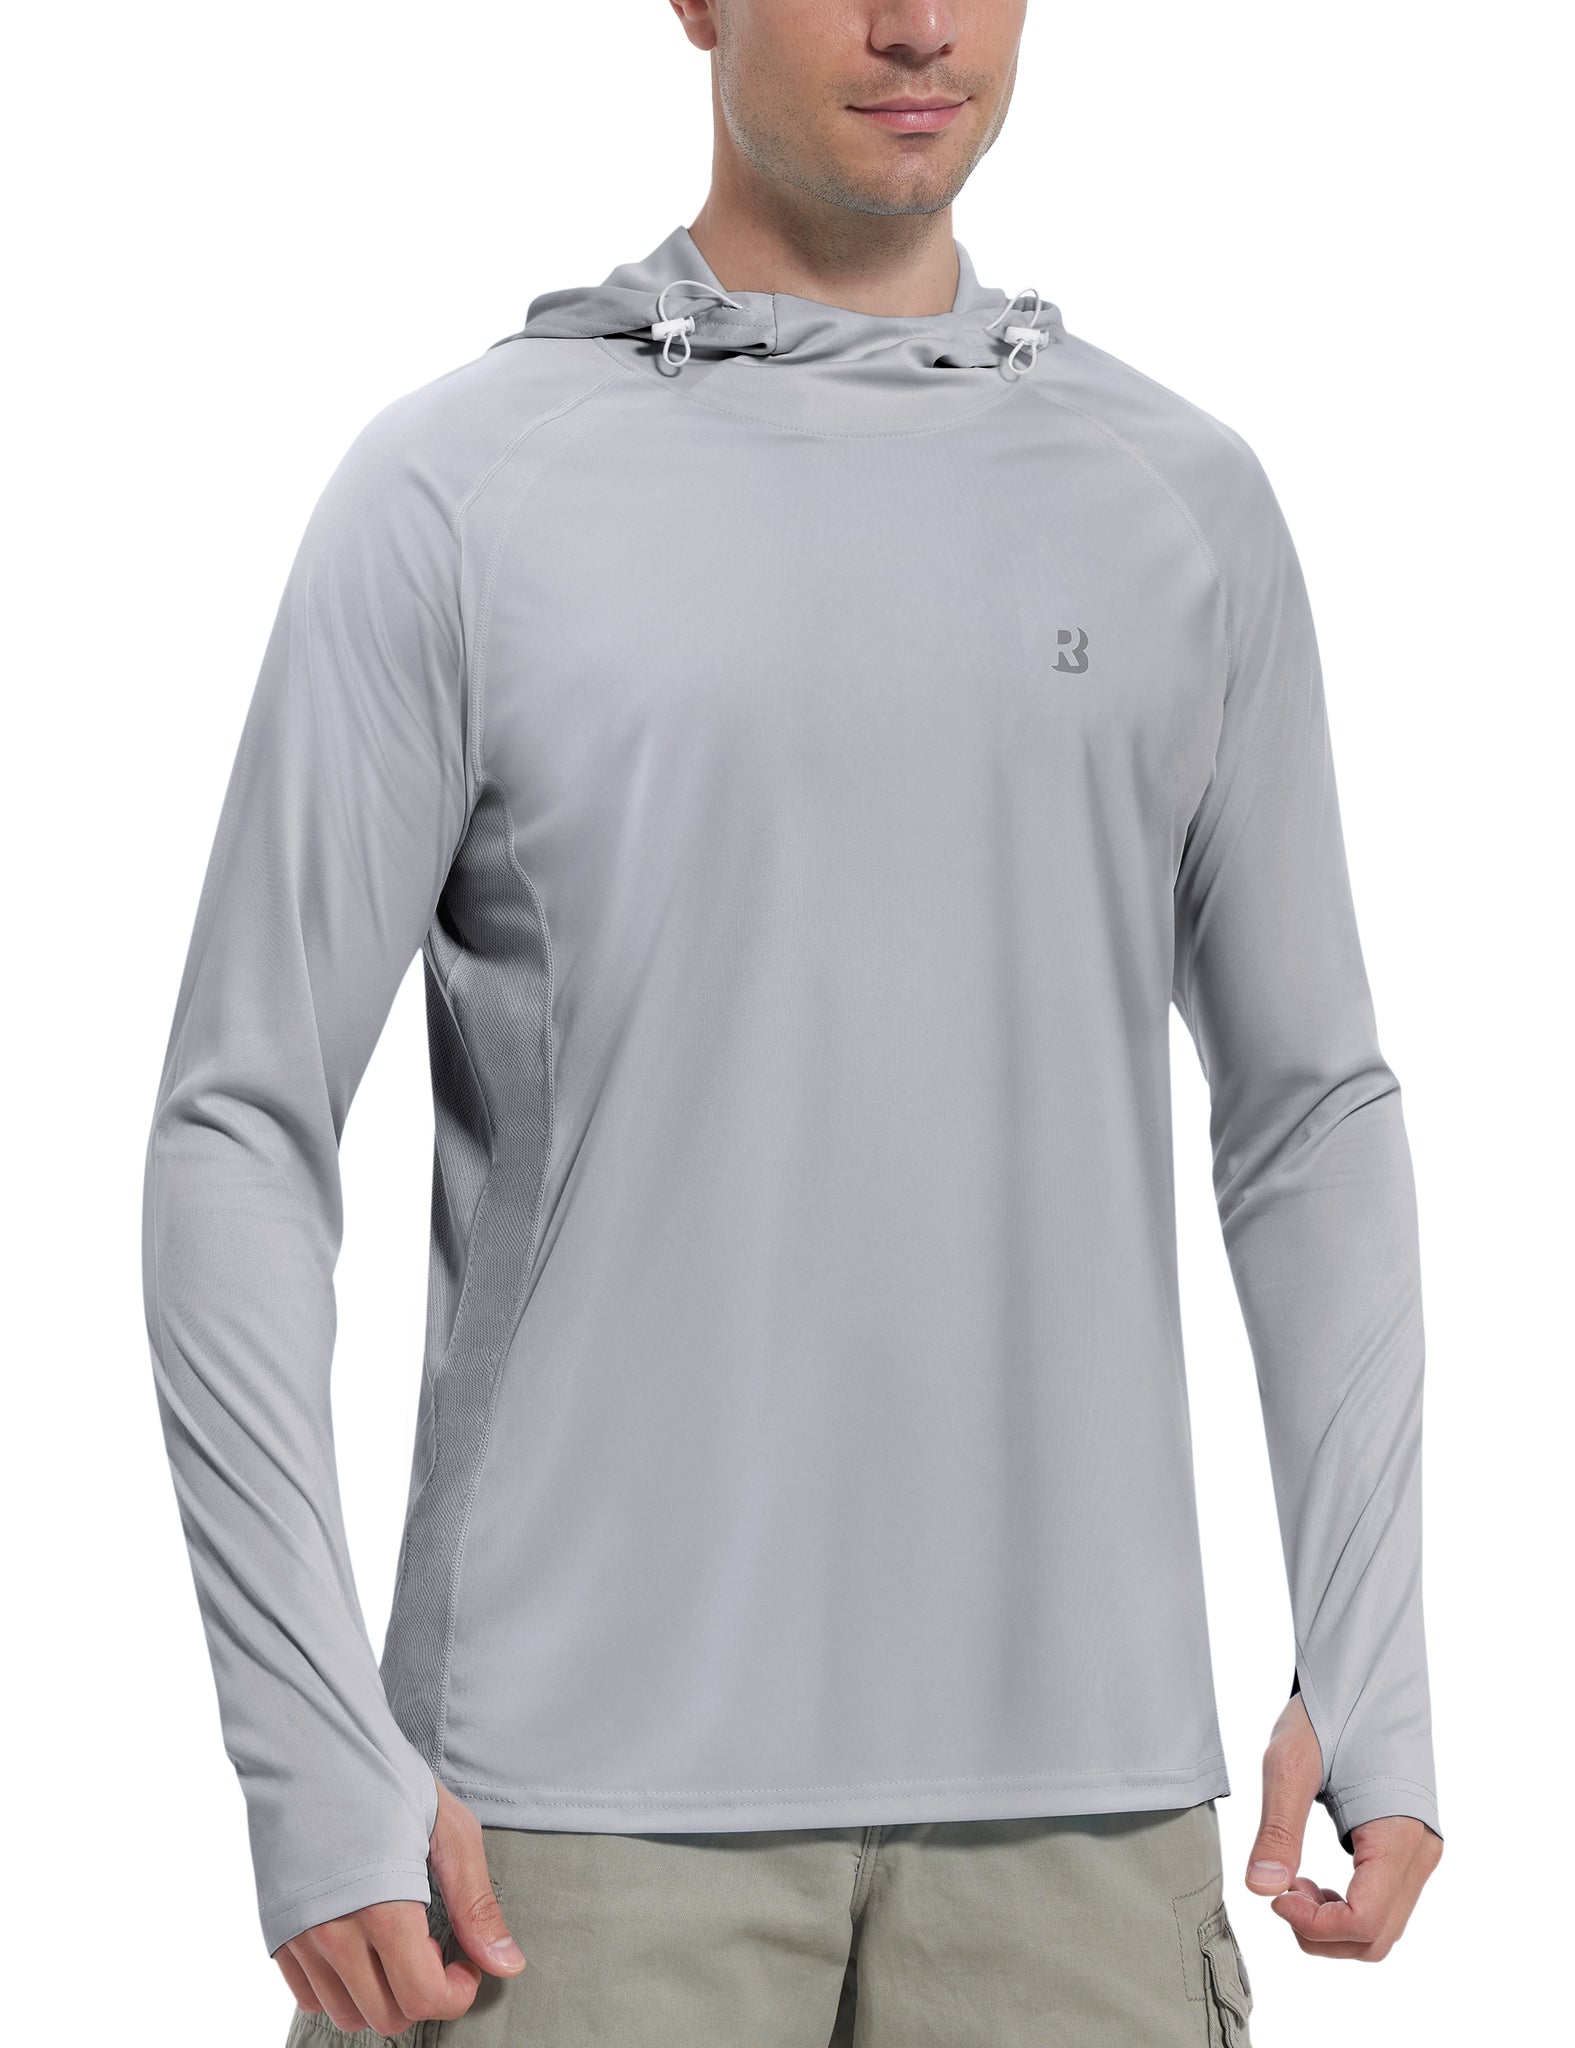 Roadbox Men's Hooded UV Sun Shirts Long Sleeve - Athletic Workout Running Thumbholes T-Shirts Quick-Dry Lightweight